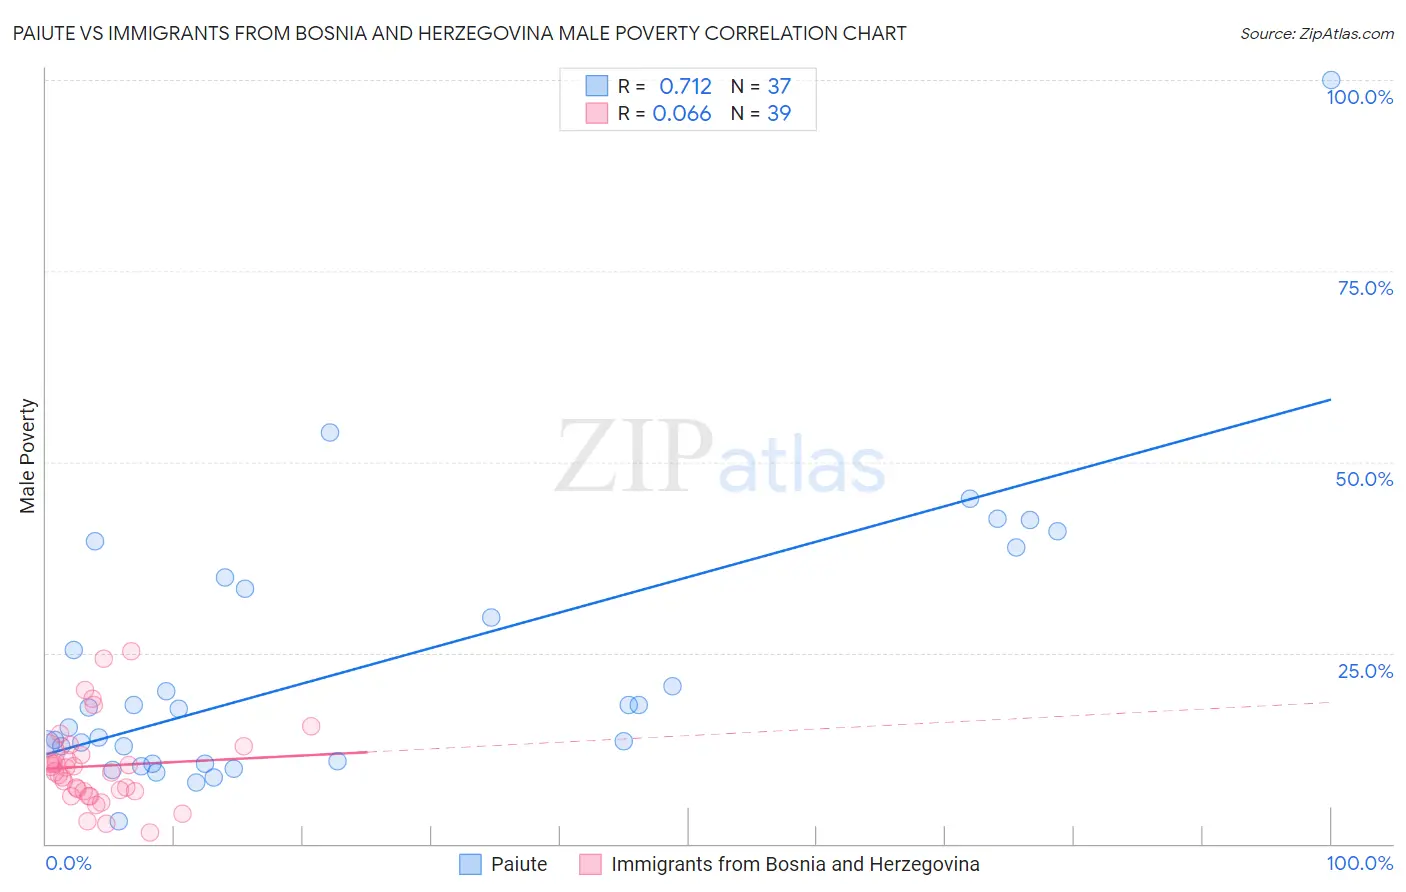 Paiute vs Immigrants from Bosnia and Herzegovina Male Poverty